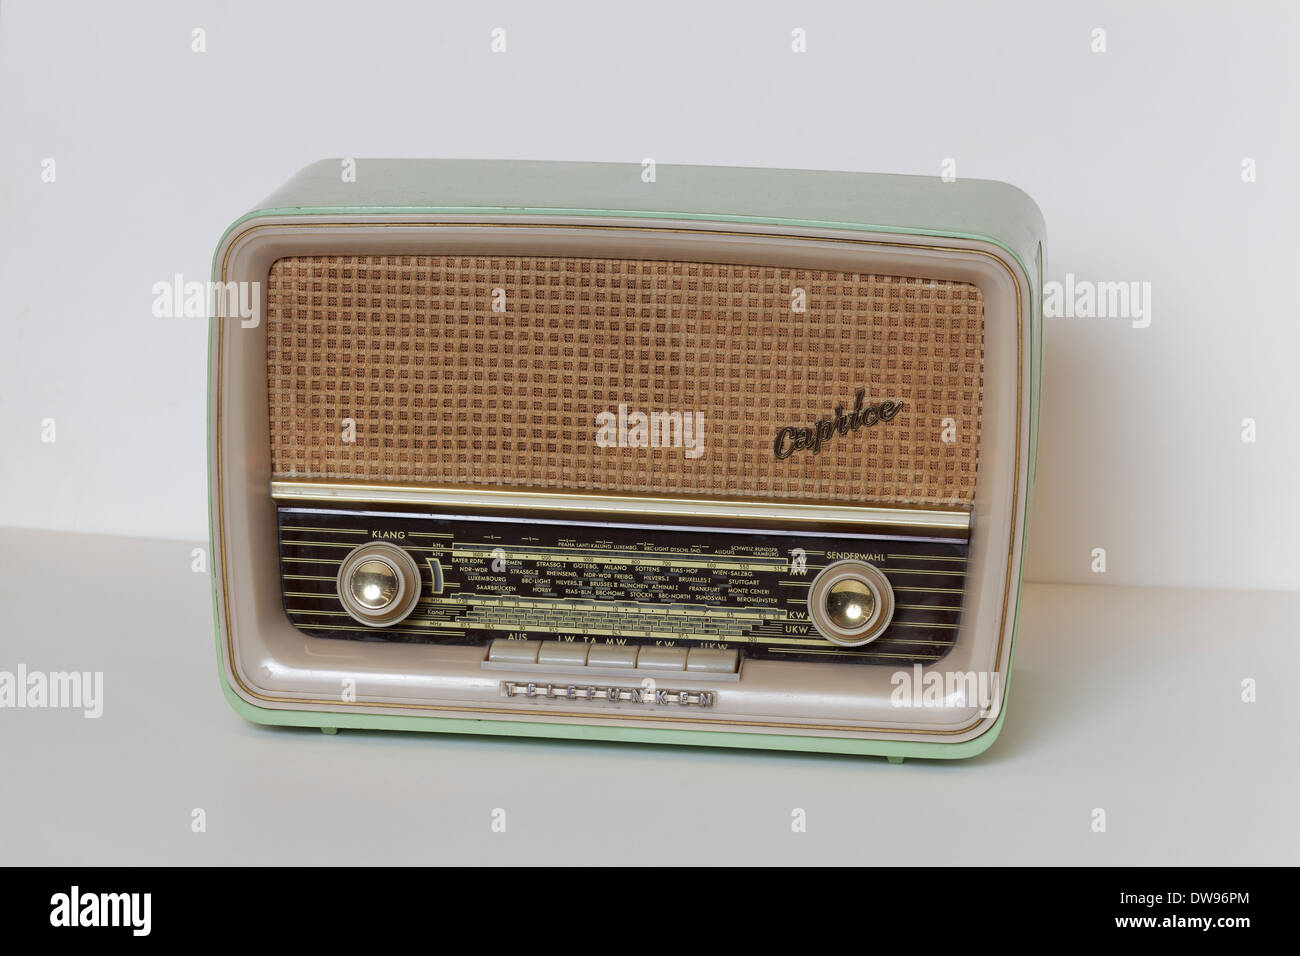 Telefunken radio from 1957, model Caprice K1151, Radio Museum Duisburg, North Rhine-Westphalia, Germany Stock Photo